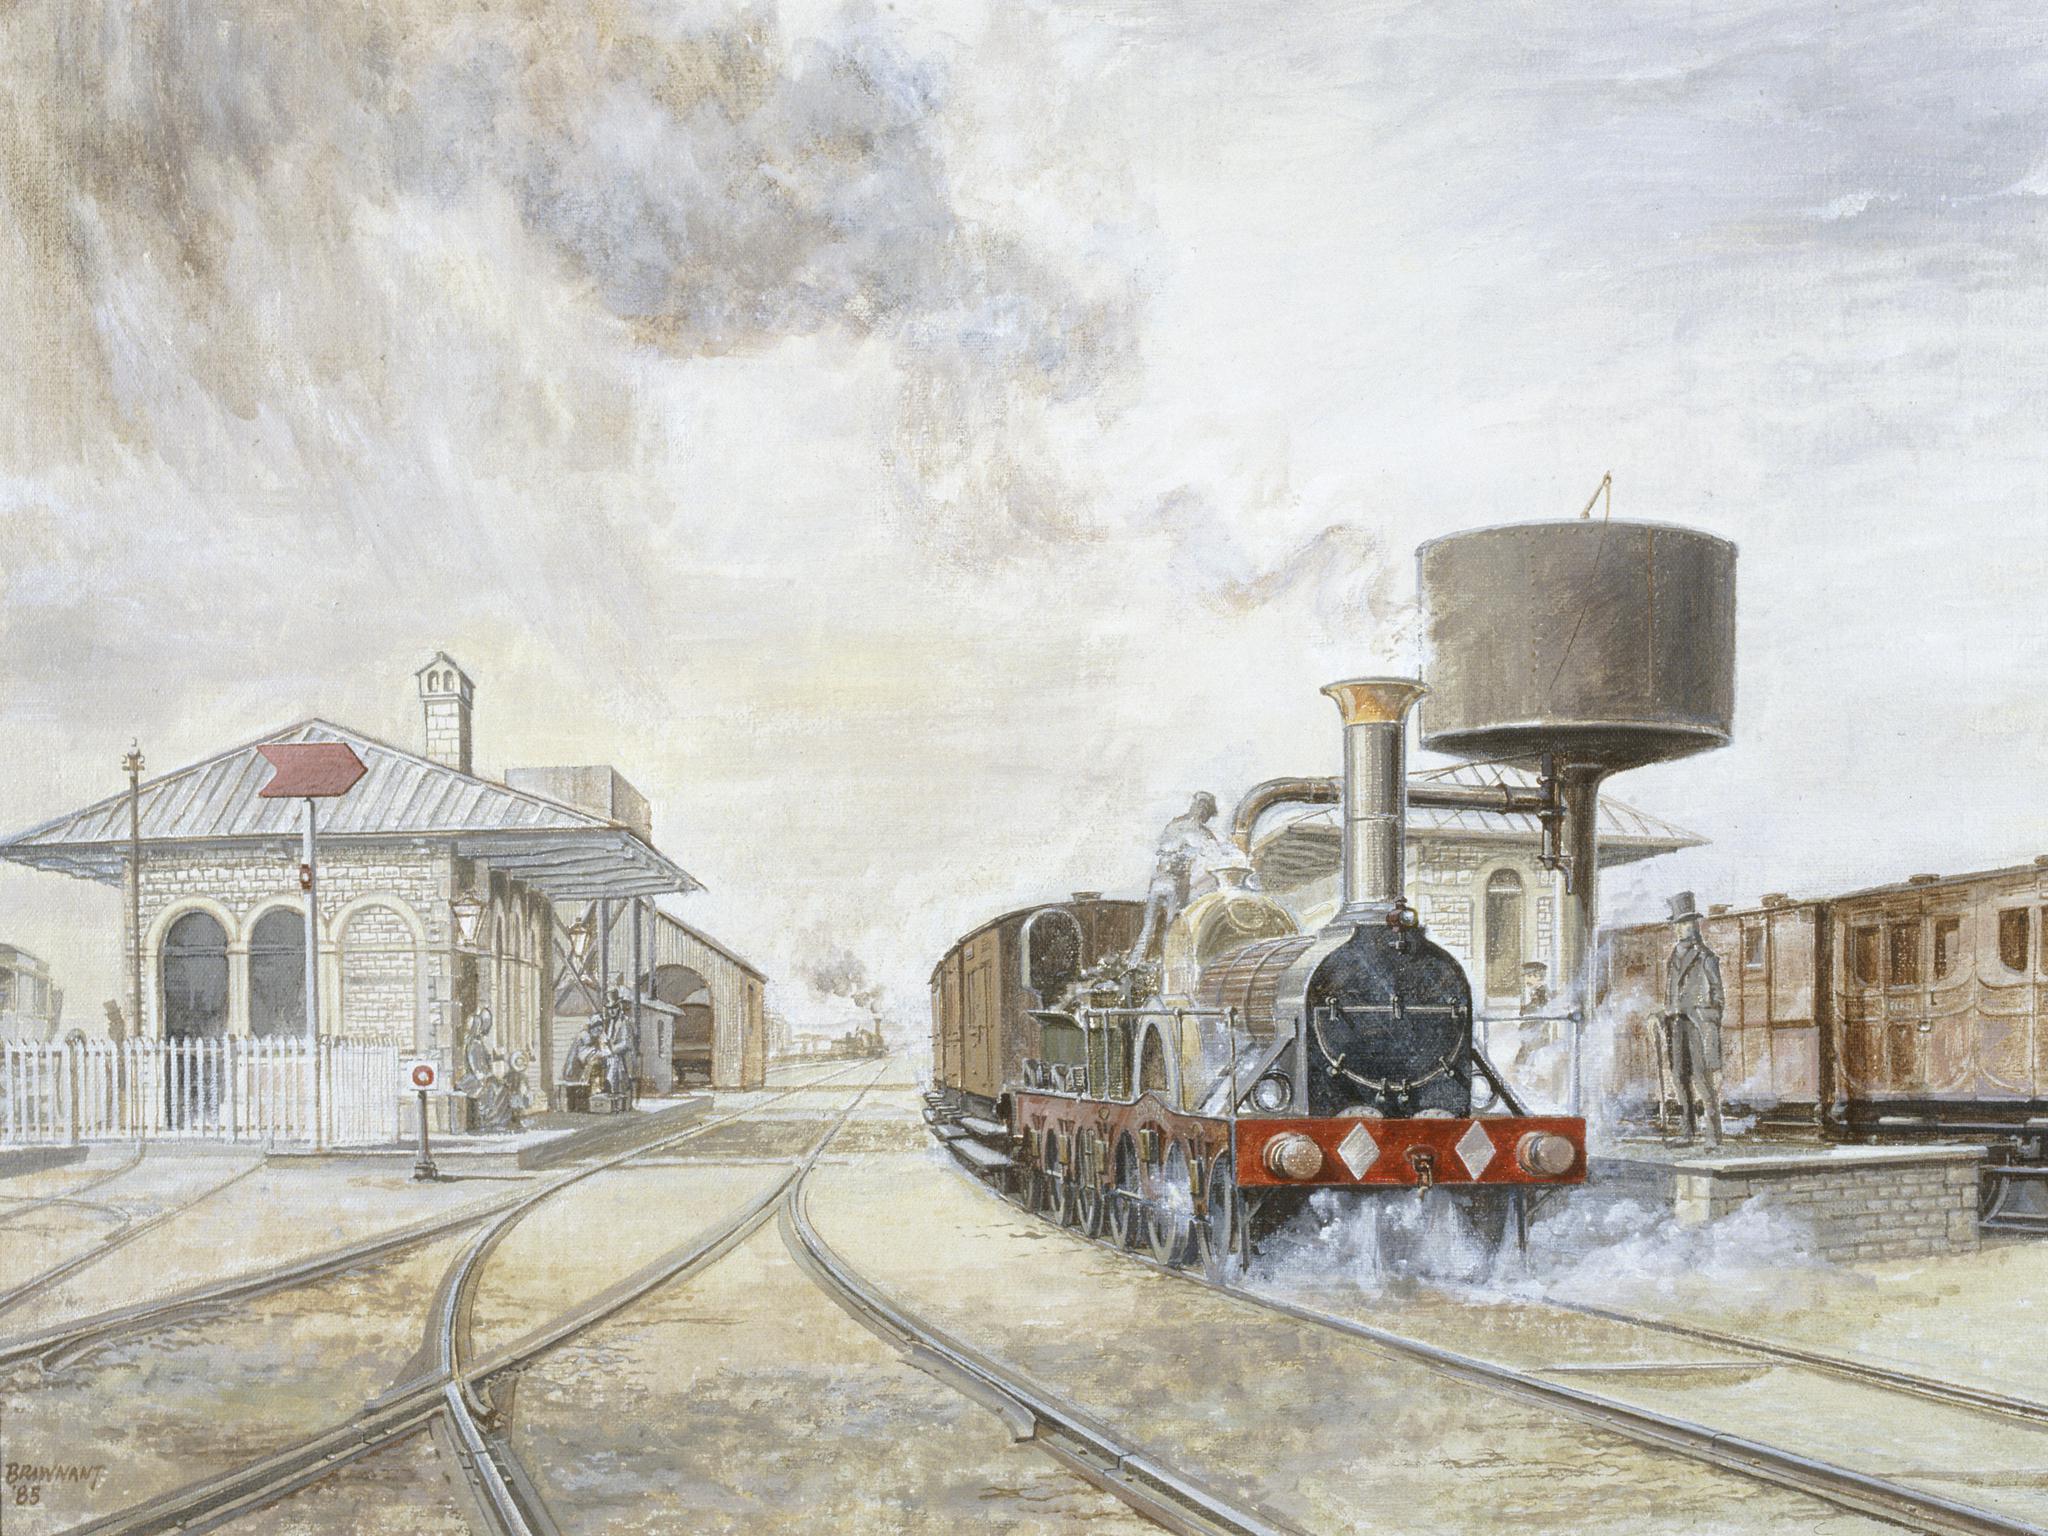 South Wales Railway at Bridgend c.1855 (painting)